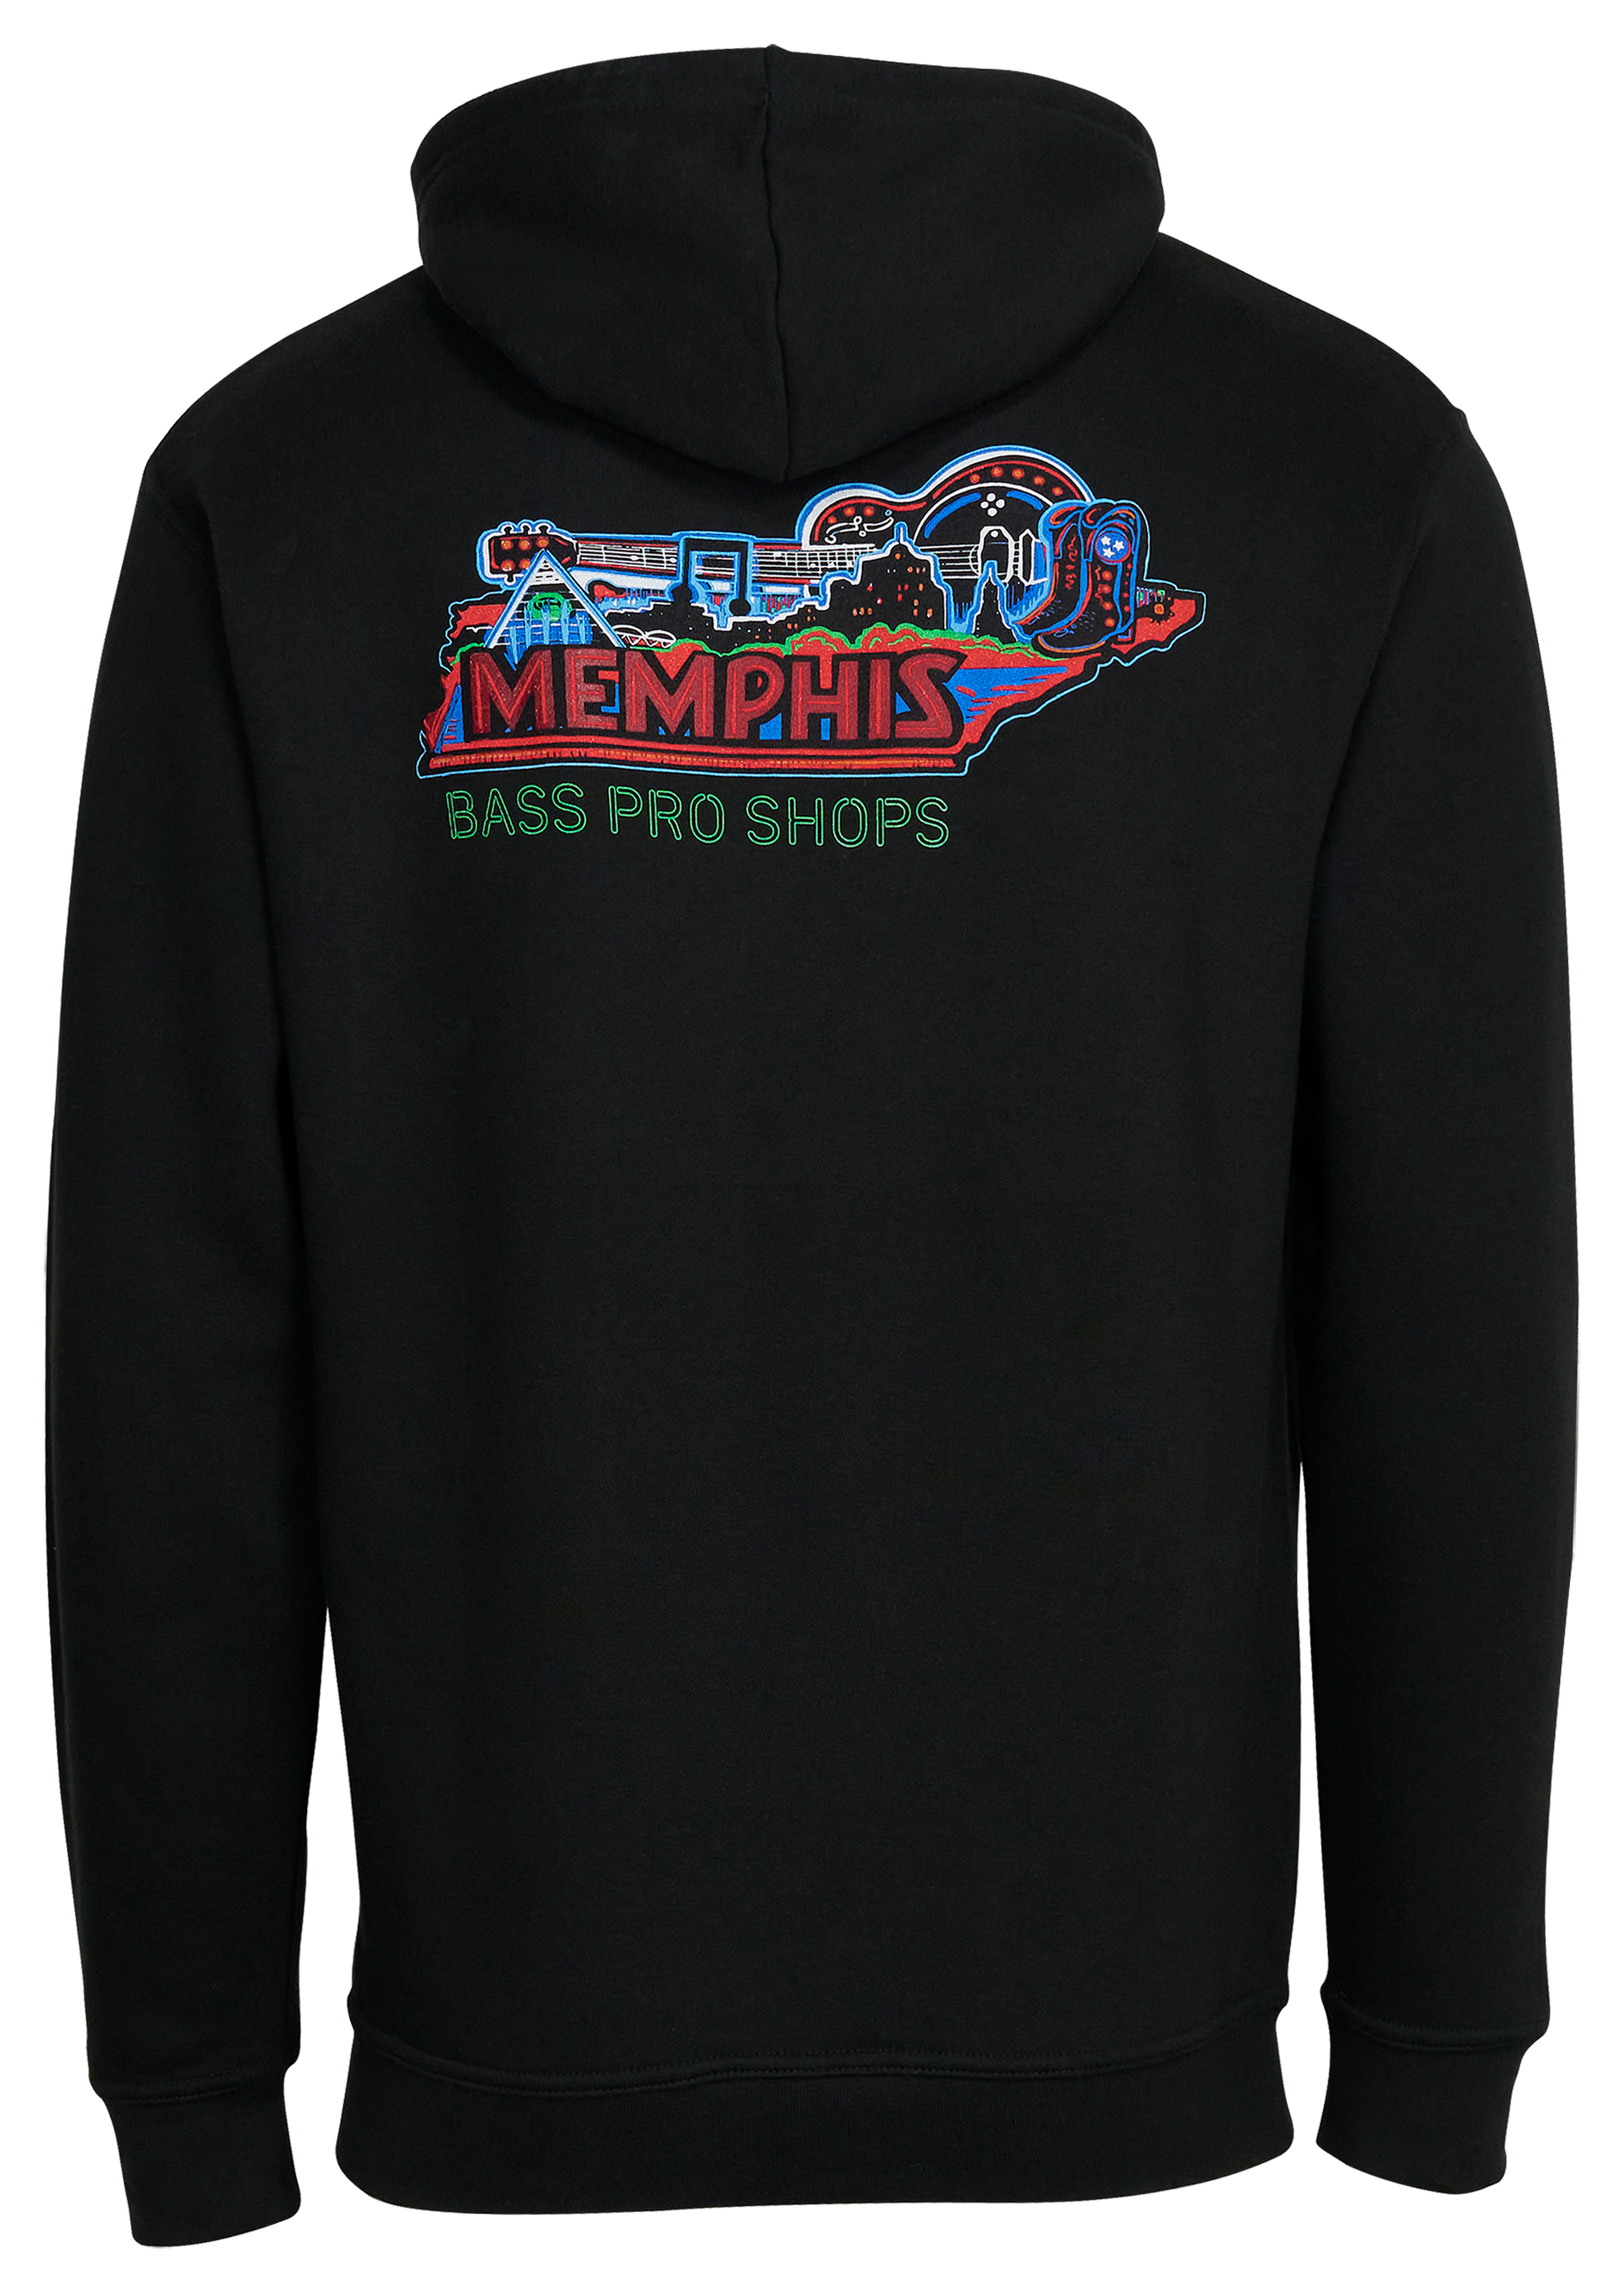 Bass Pro Shops Memphis Skyline Hoodie for Men - Black - XL